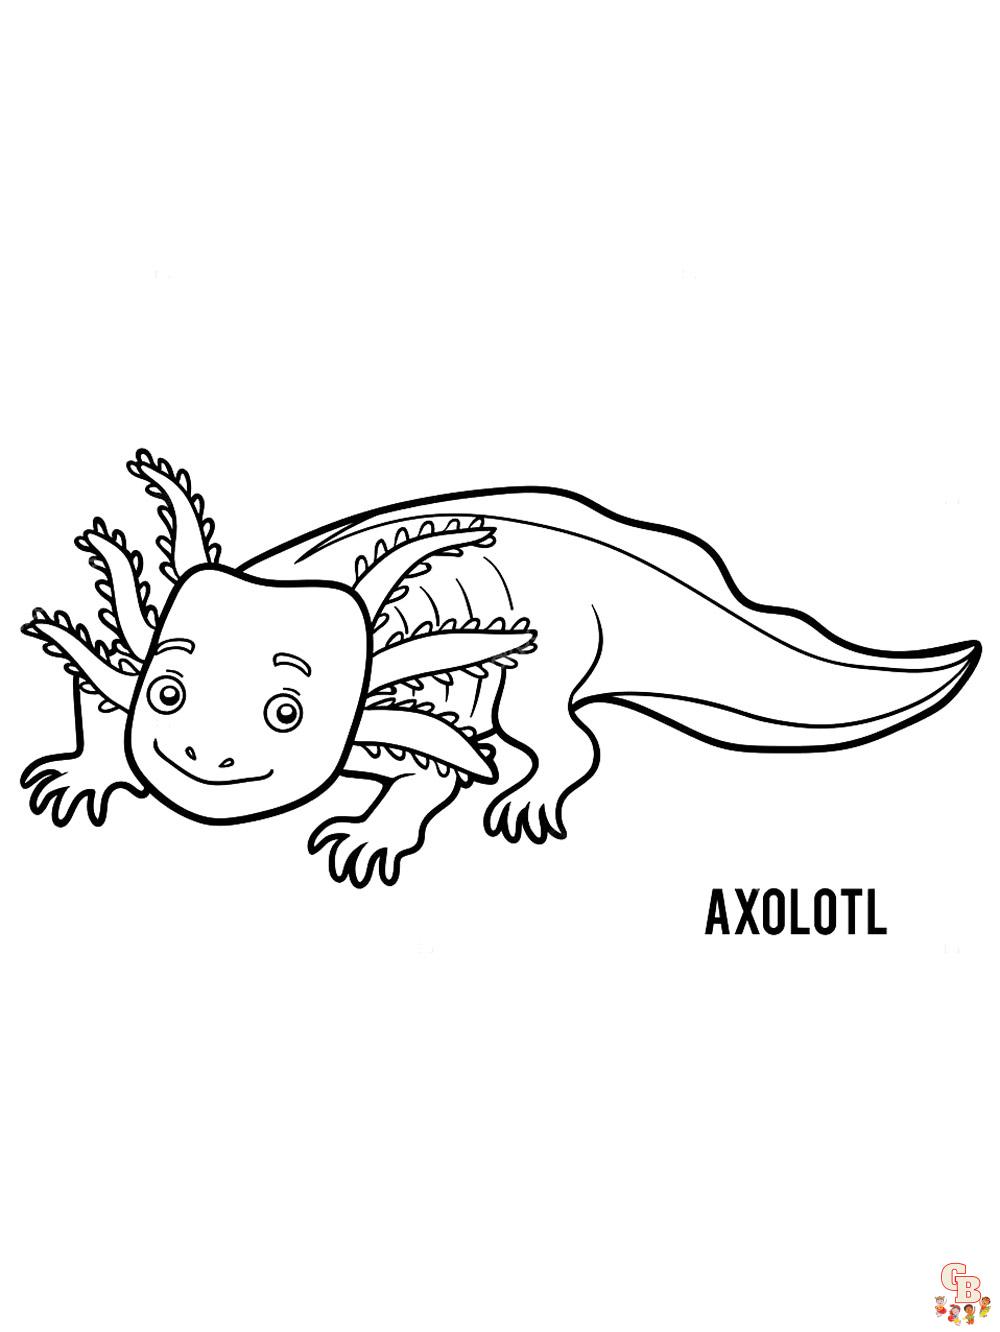 Axolotl kleurplaat 16